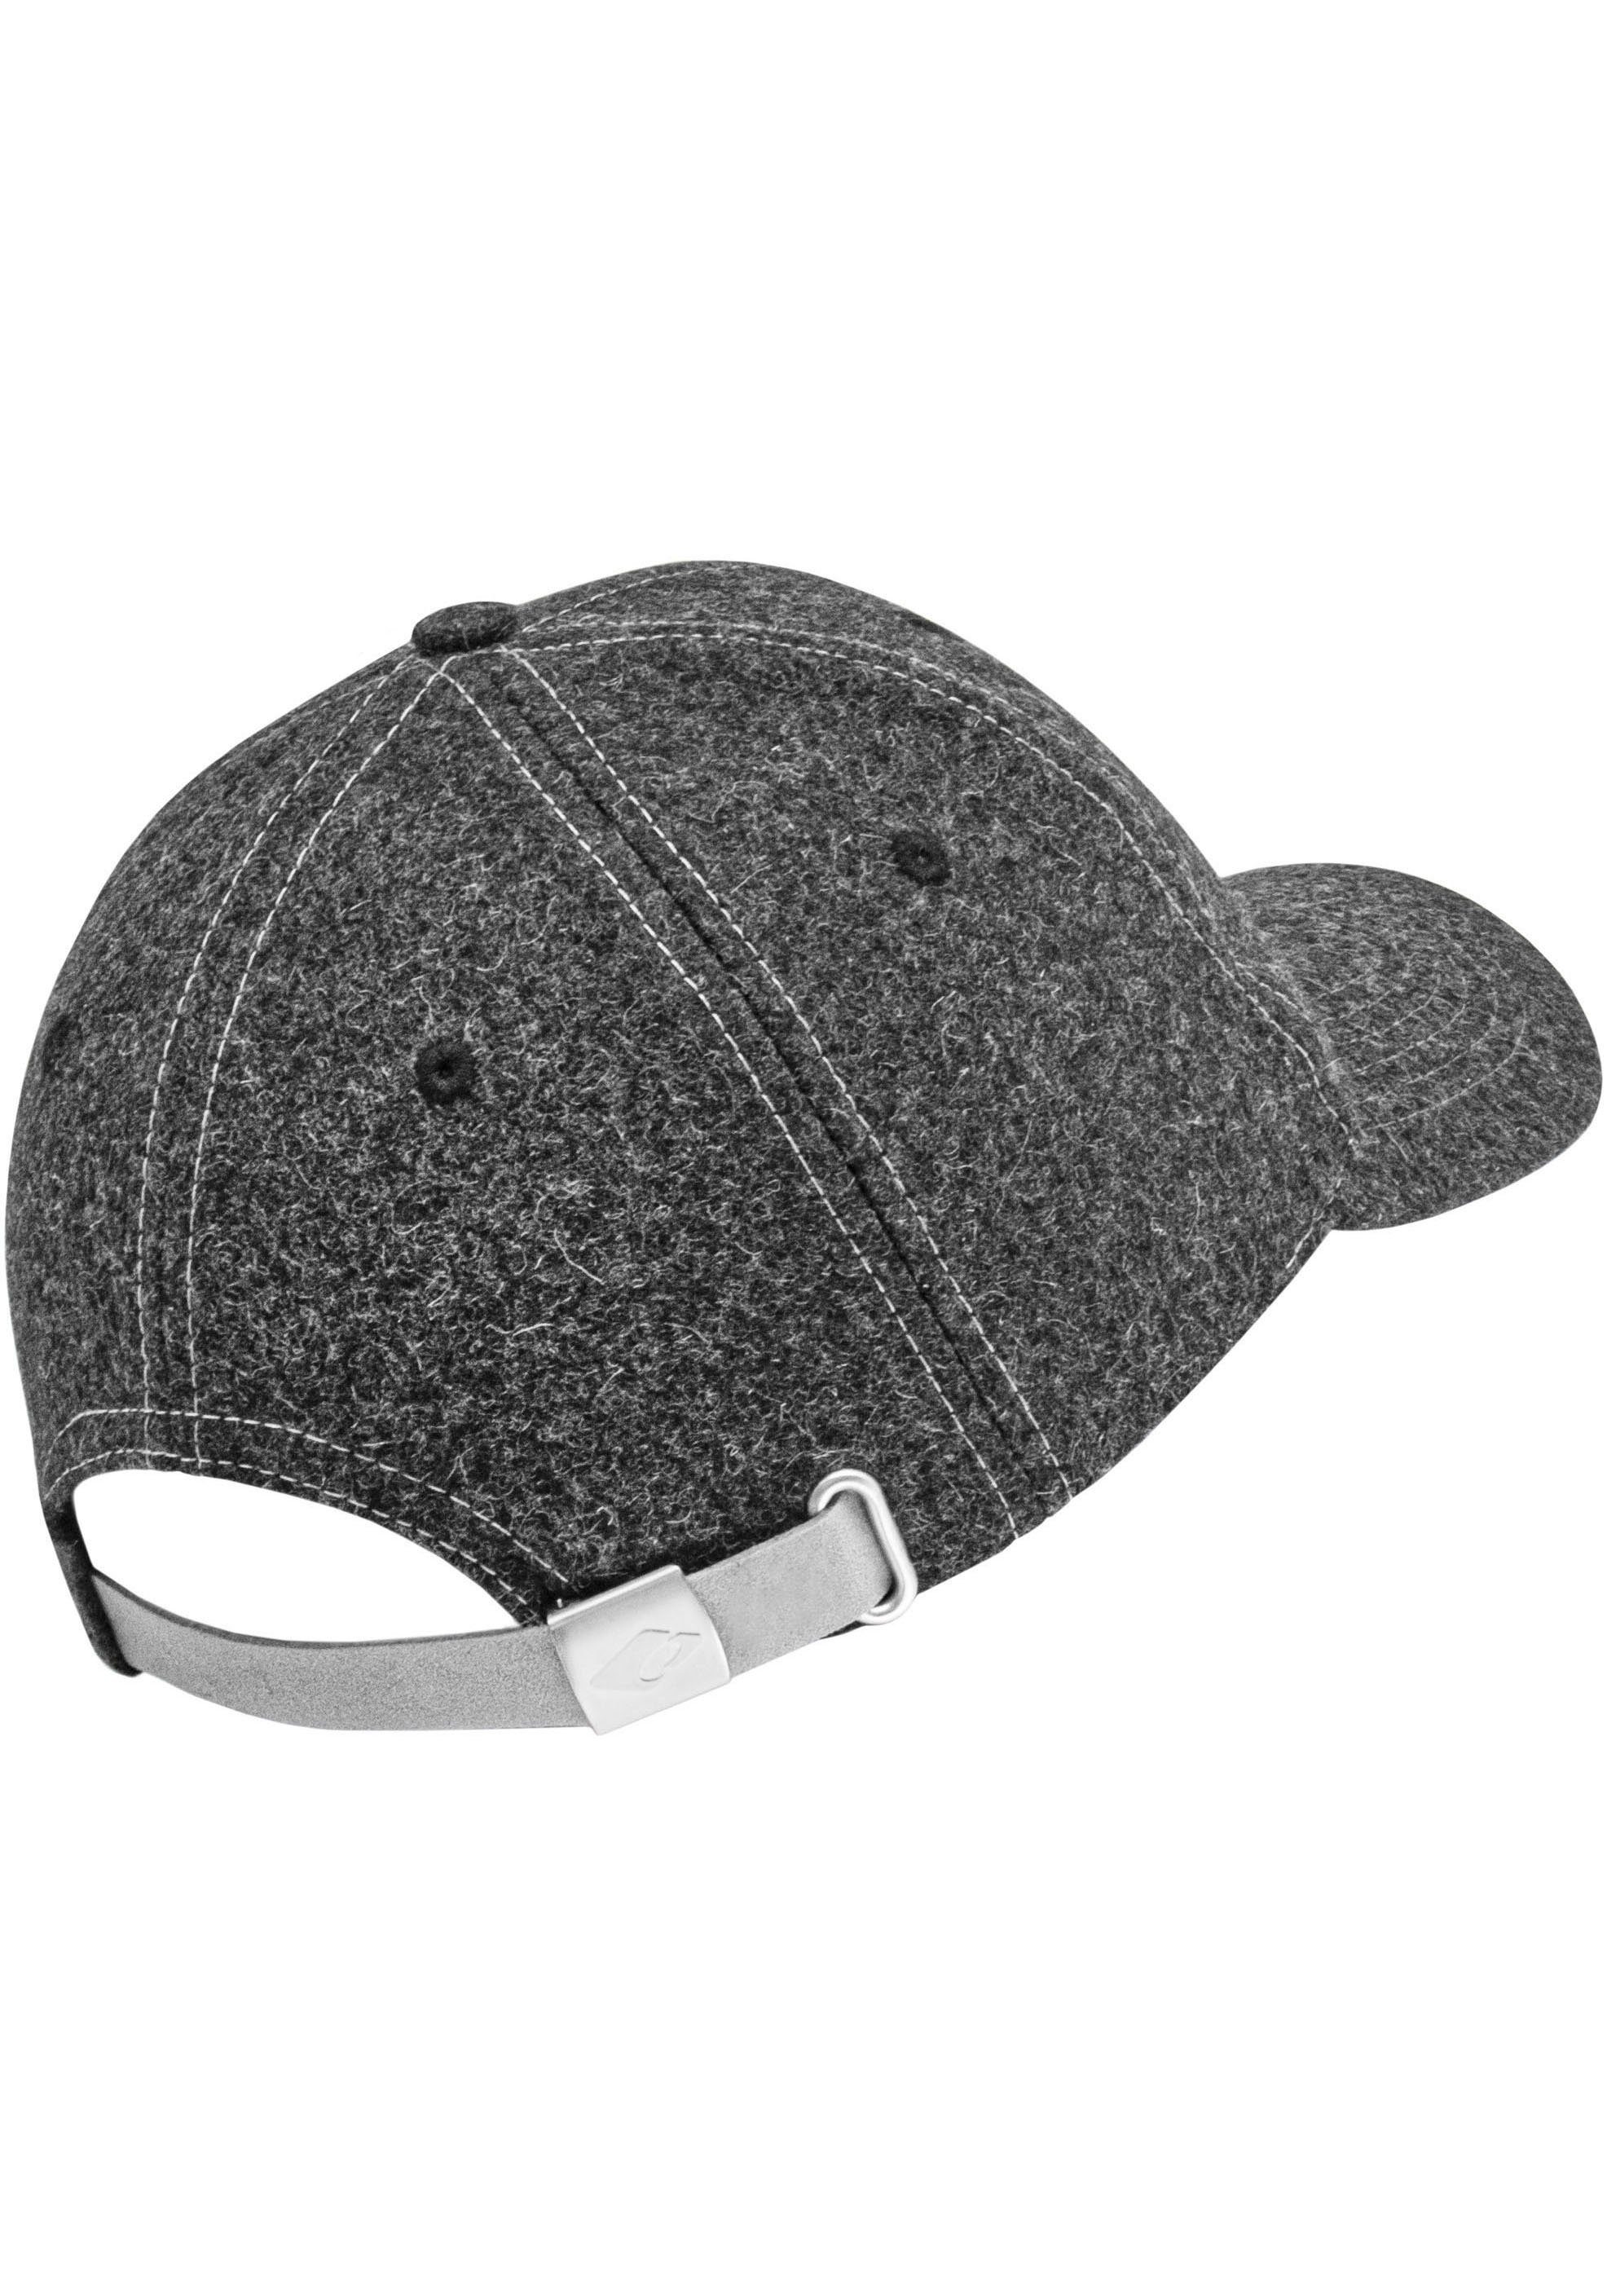 Baseball Hat chillouts Material grey Mateo Wasserabweisendes dark Cap